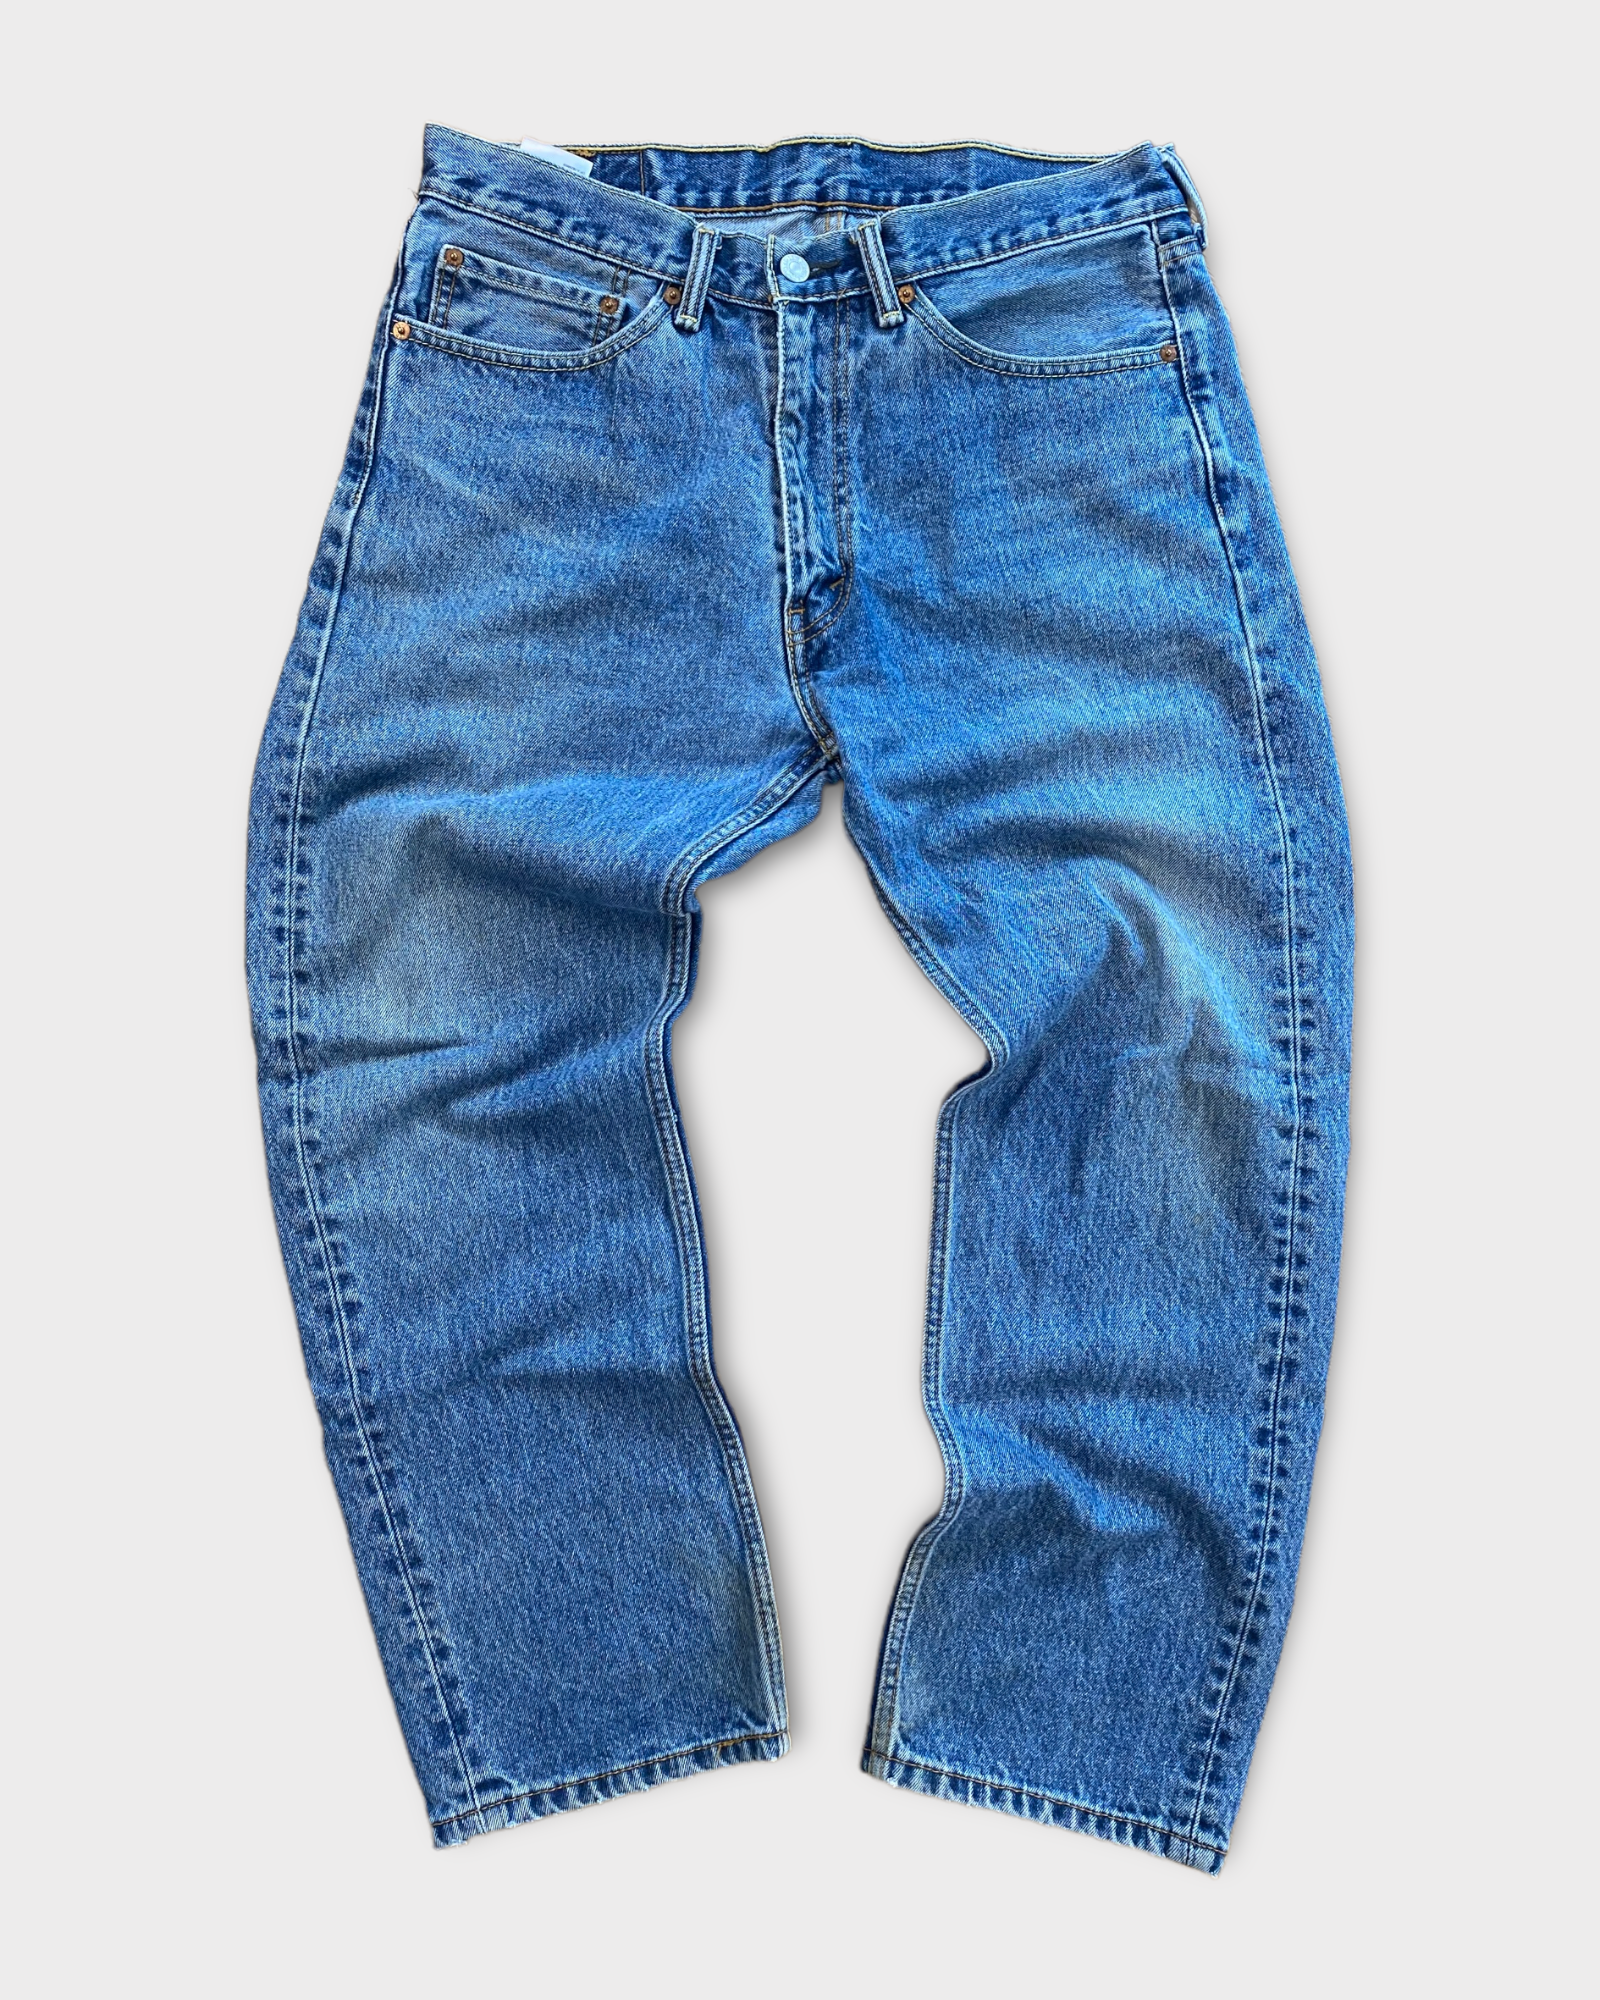 Vintage 90s Levi's 505 Denim Jeans – Extra Crispy